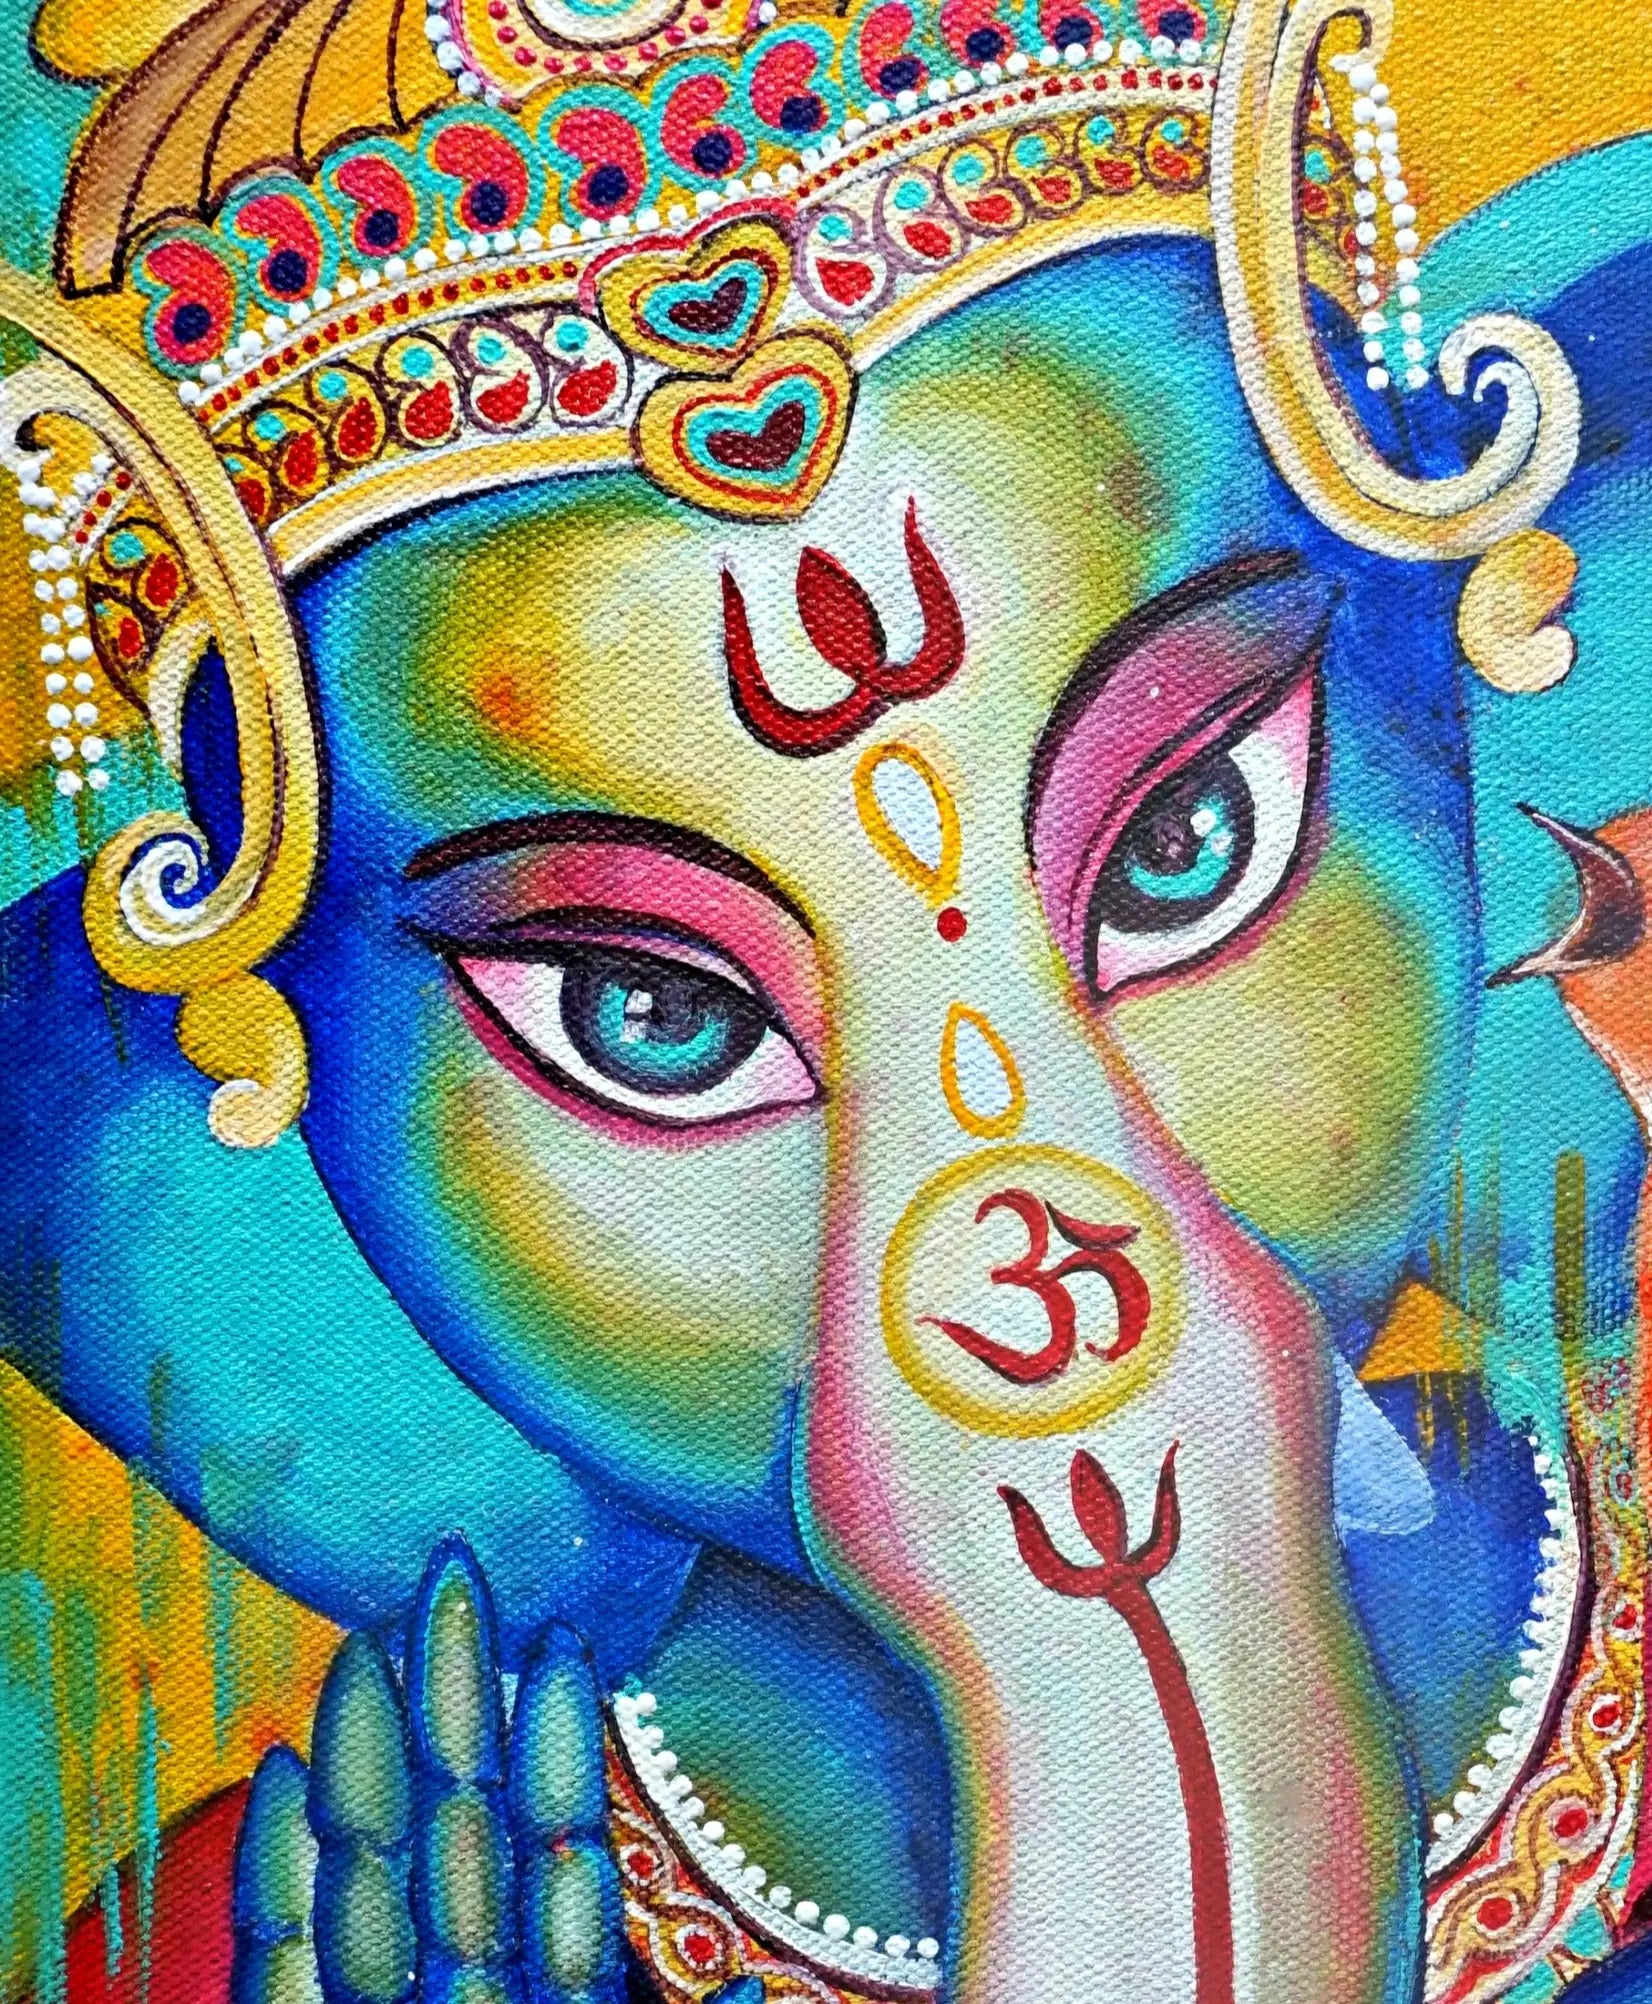 Abstract Ganesha - 03 Painting by Akash Bhisikar | Saatchi Art